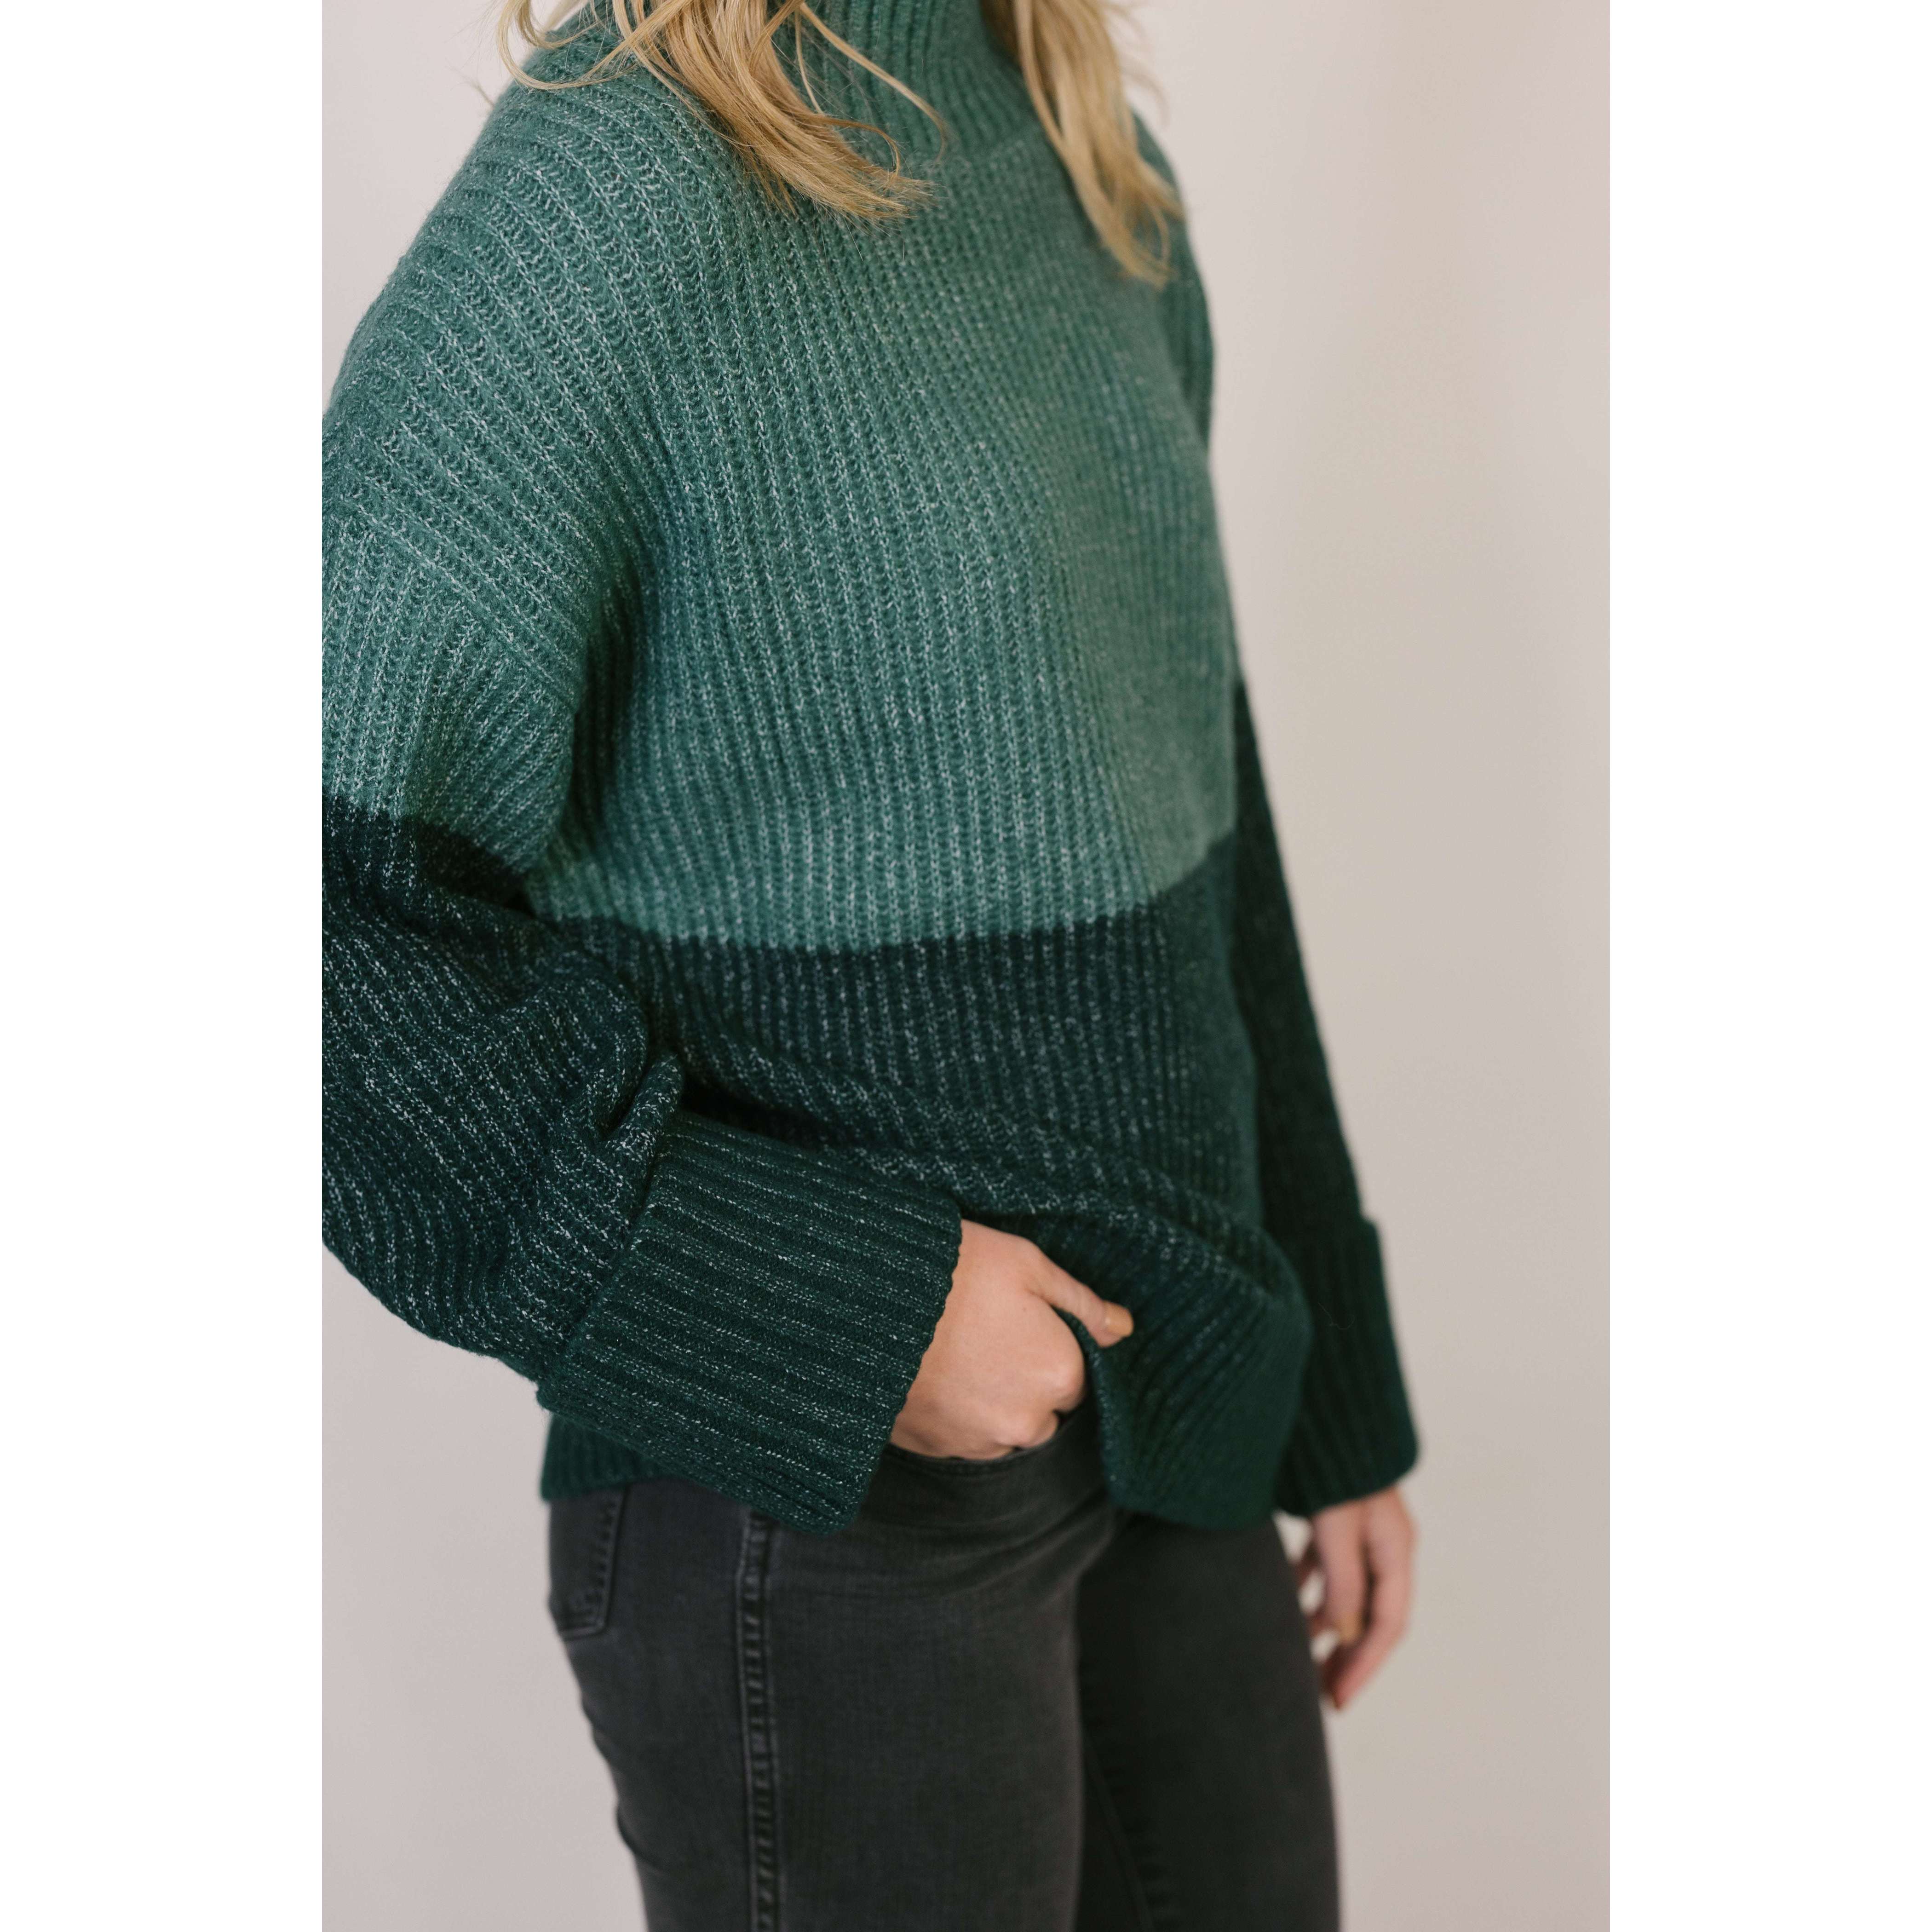 8.28 Boutique:Z-Supply,Z-Supply Poppy Striped Sweater in Deep Green,Sweaters